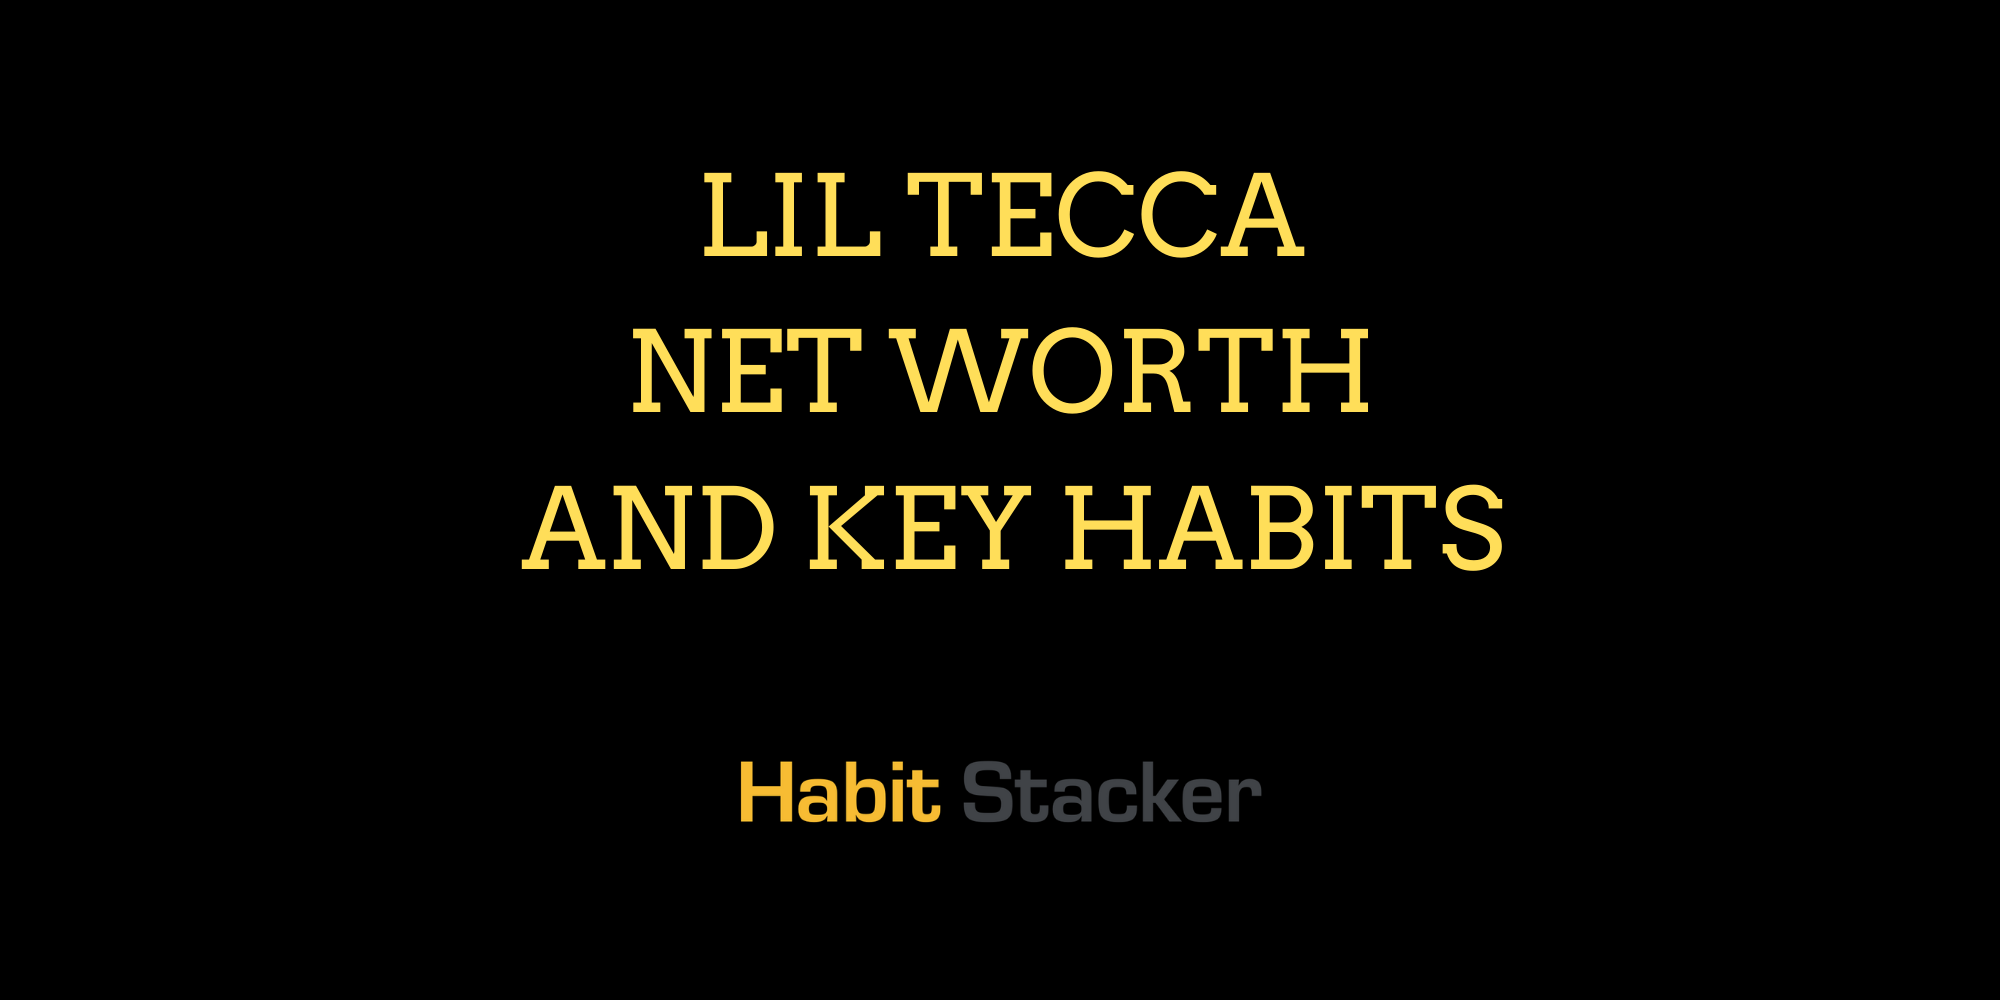 Lil Tecca Net Worth and Key Habits